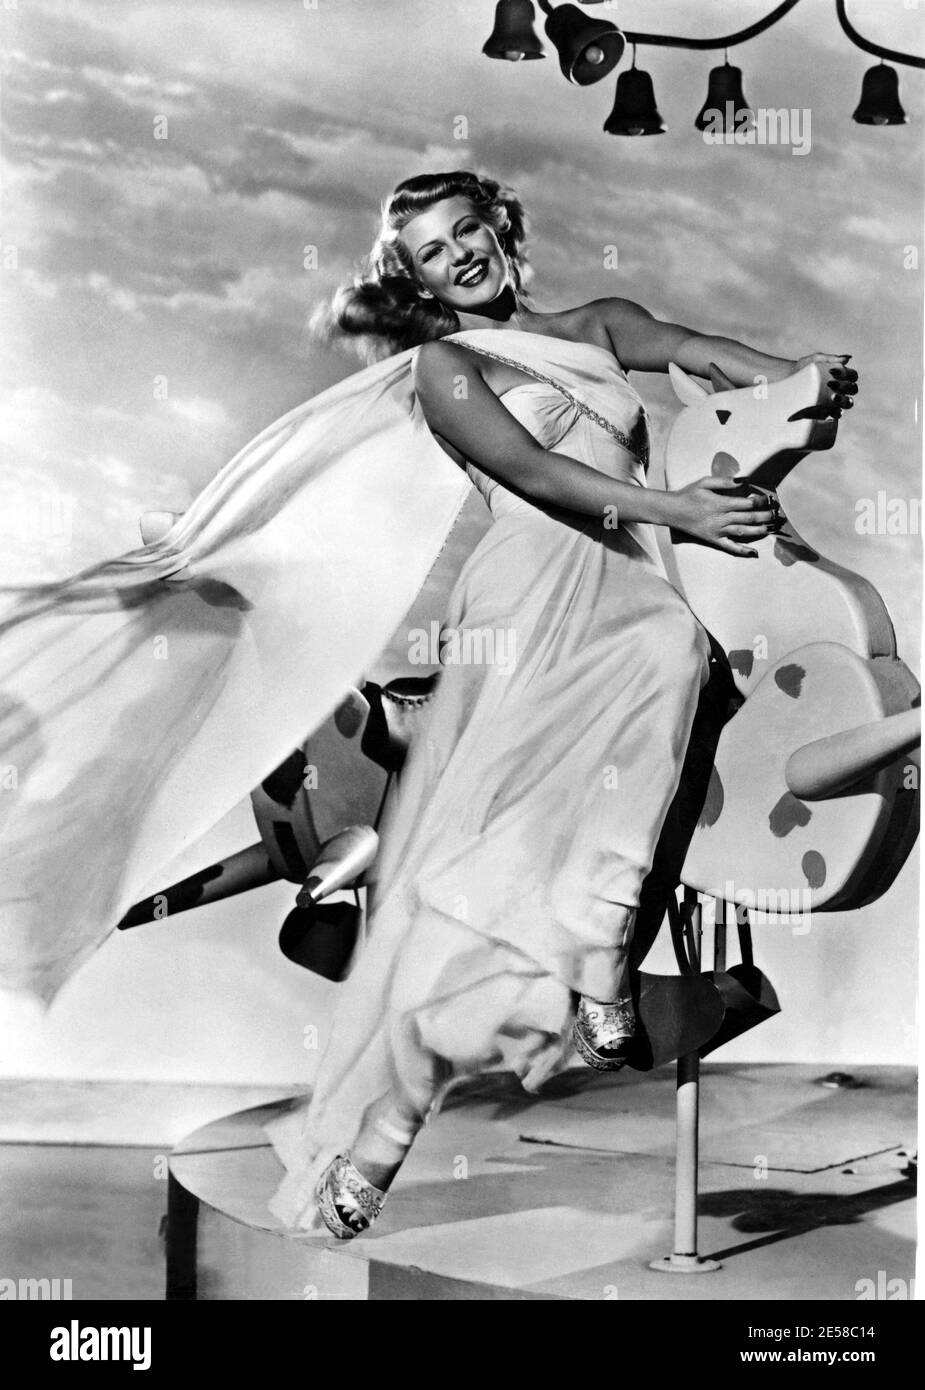 1948 c., USA : The movie actress  RITA HAYWORTH  ( 1918 - 1987 ) - CINEMA - FILM - portrait - ritratto - vento - wind - giostra - luna park - lunapark - luna-park - merry-go-round - merrygoround - mery go round - cavallo - horse - smile - sorriso - spalle - shoulders - sandali - sandals  ----  Archivio GBB Stock Photo